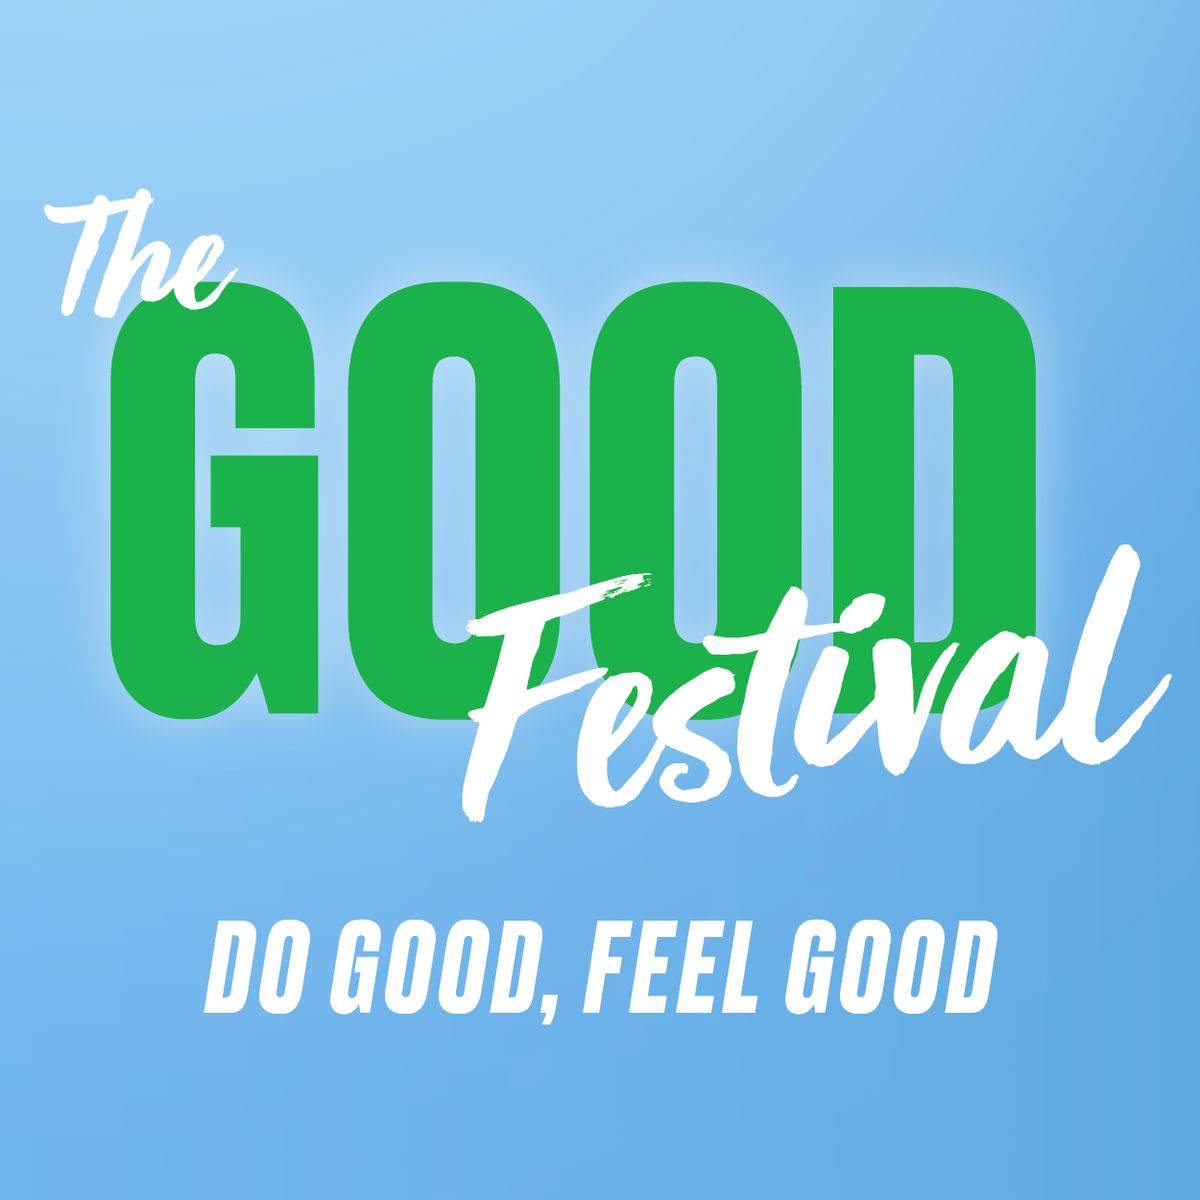 The Good Festival